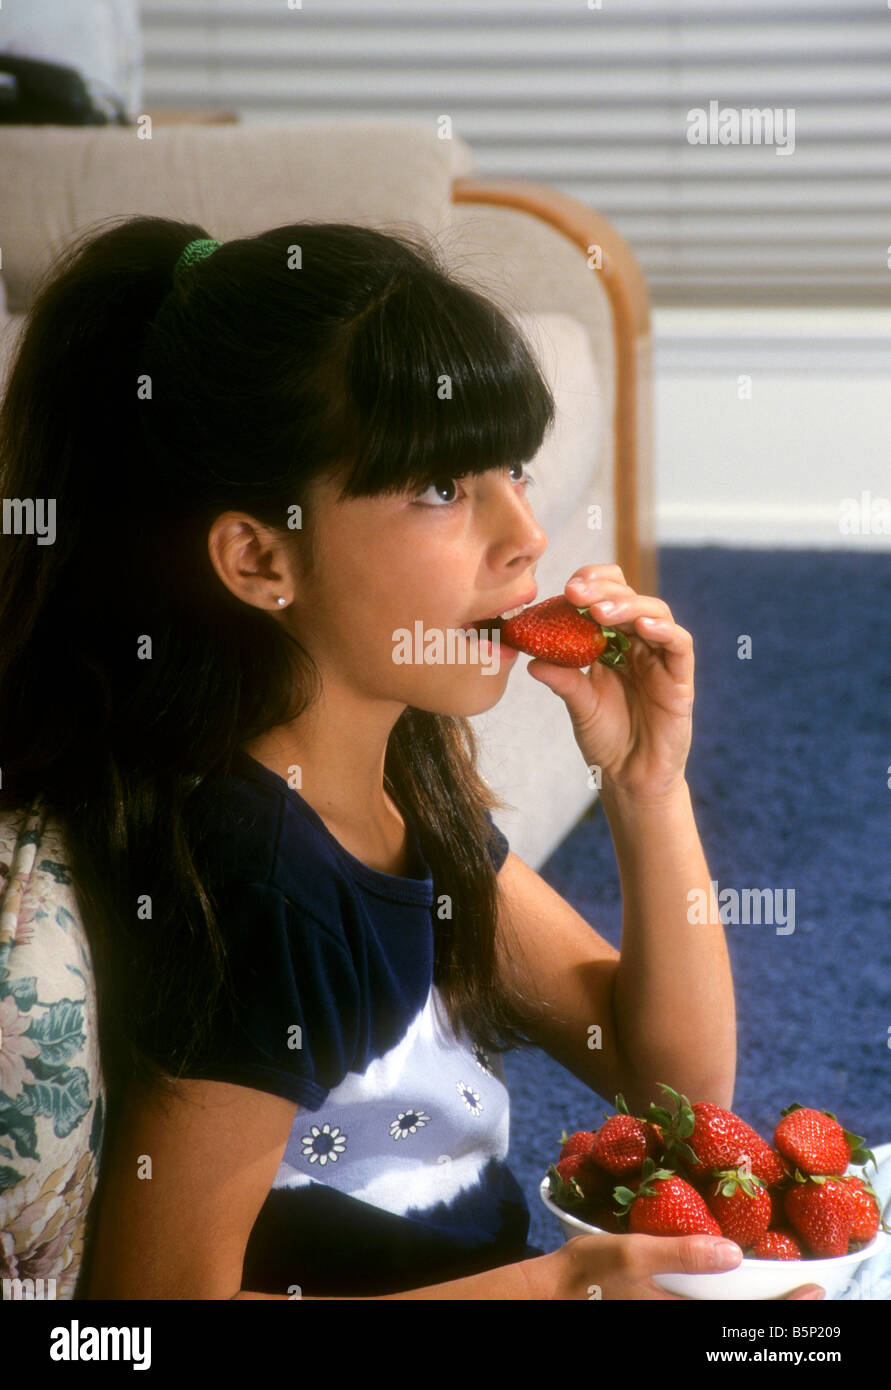 young Hispanic girl eats strawberry Stock Photo